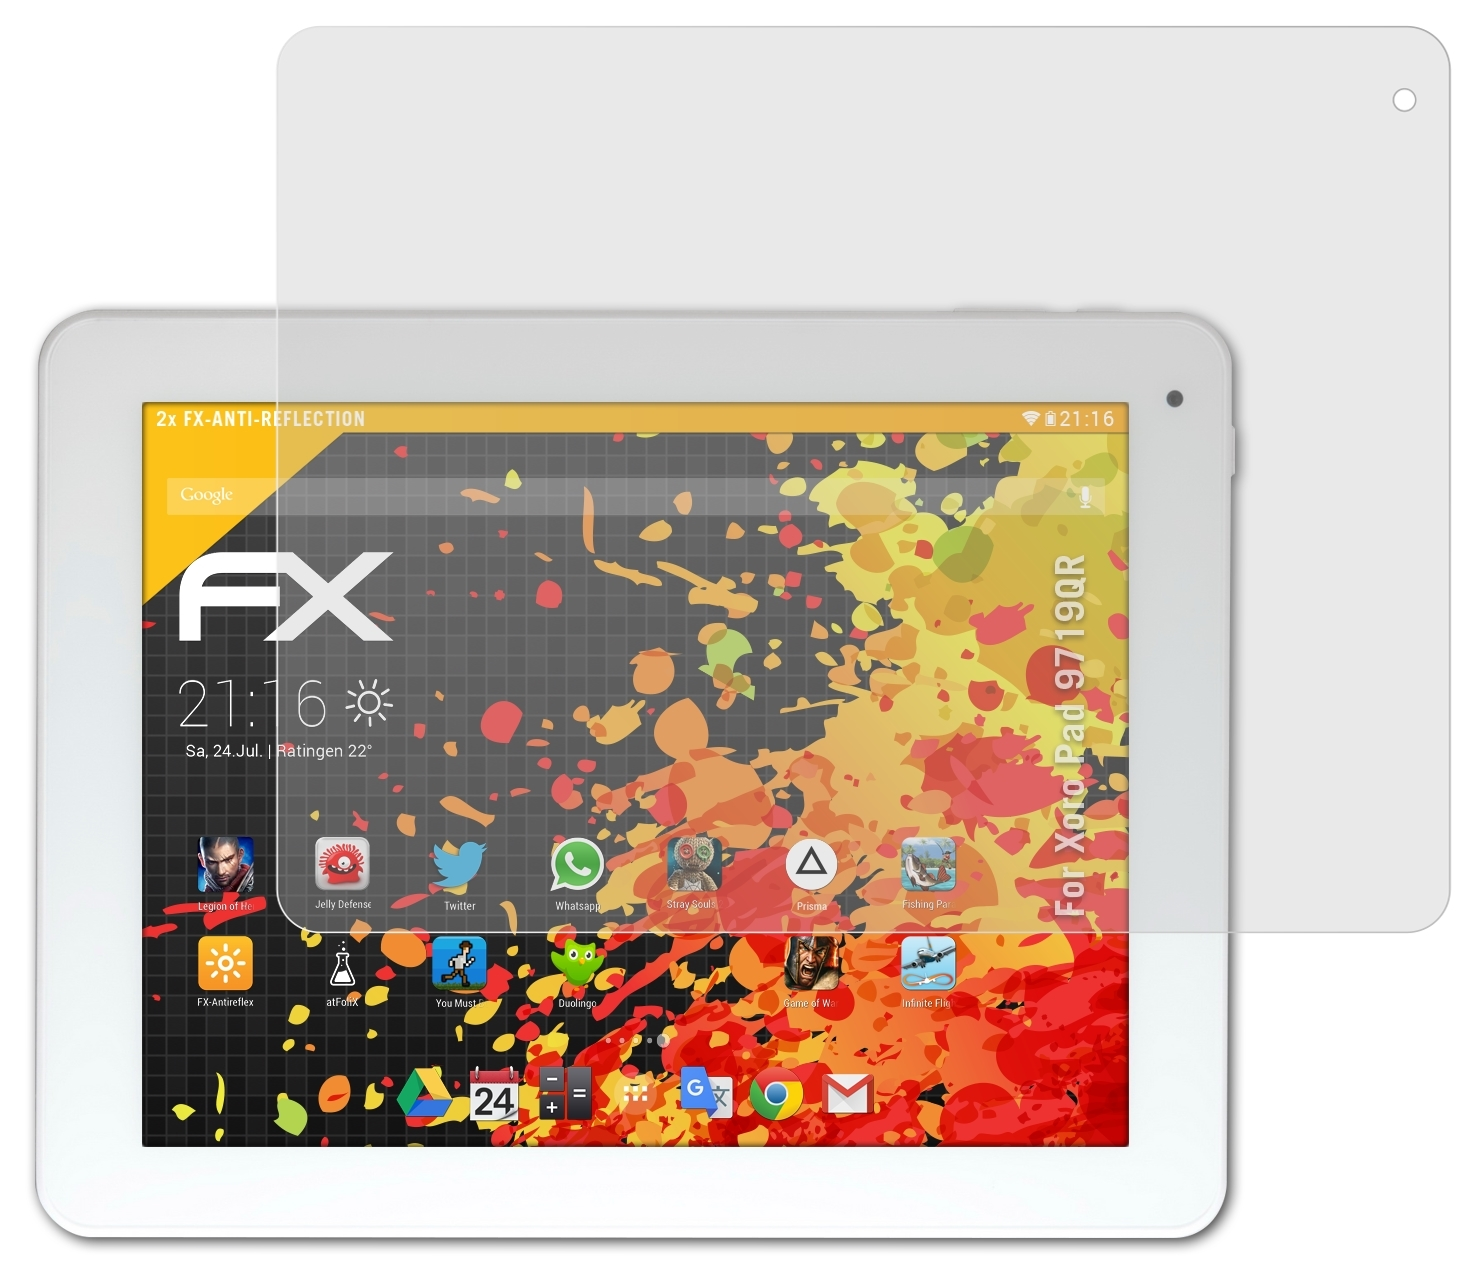 ATFOLIX 2x FX-Antireflex Displayschutz(für Xoro Pad 9719QR)